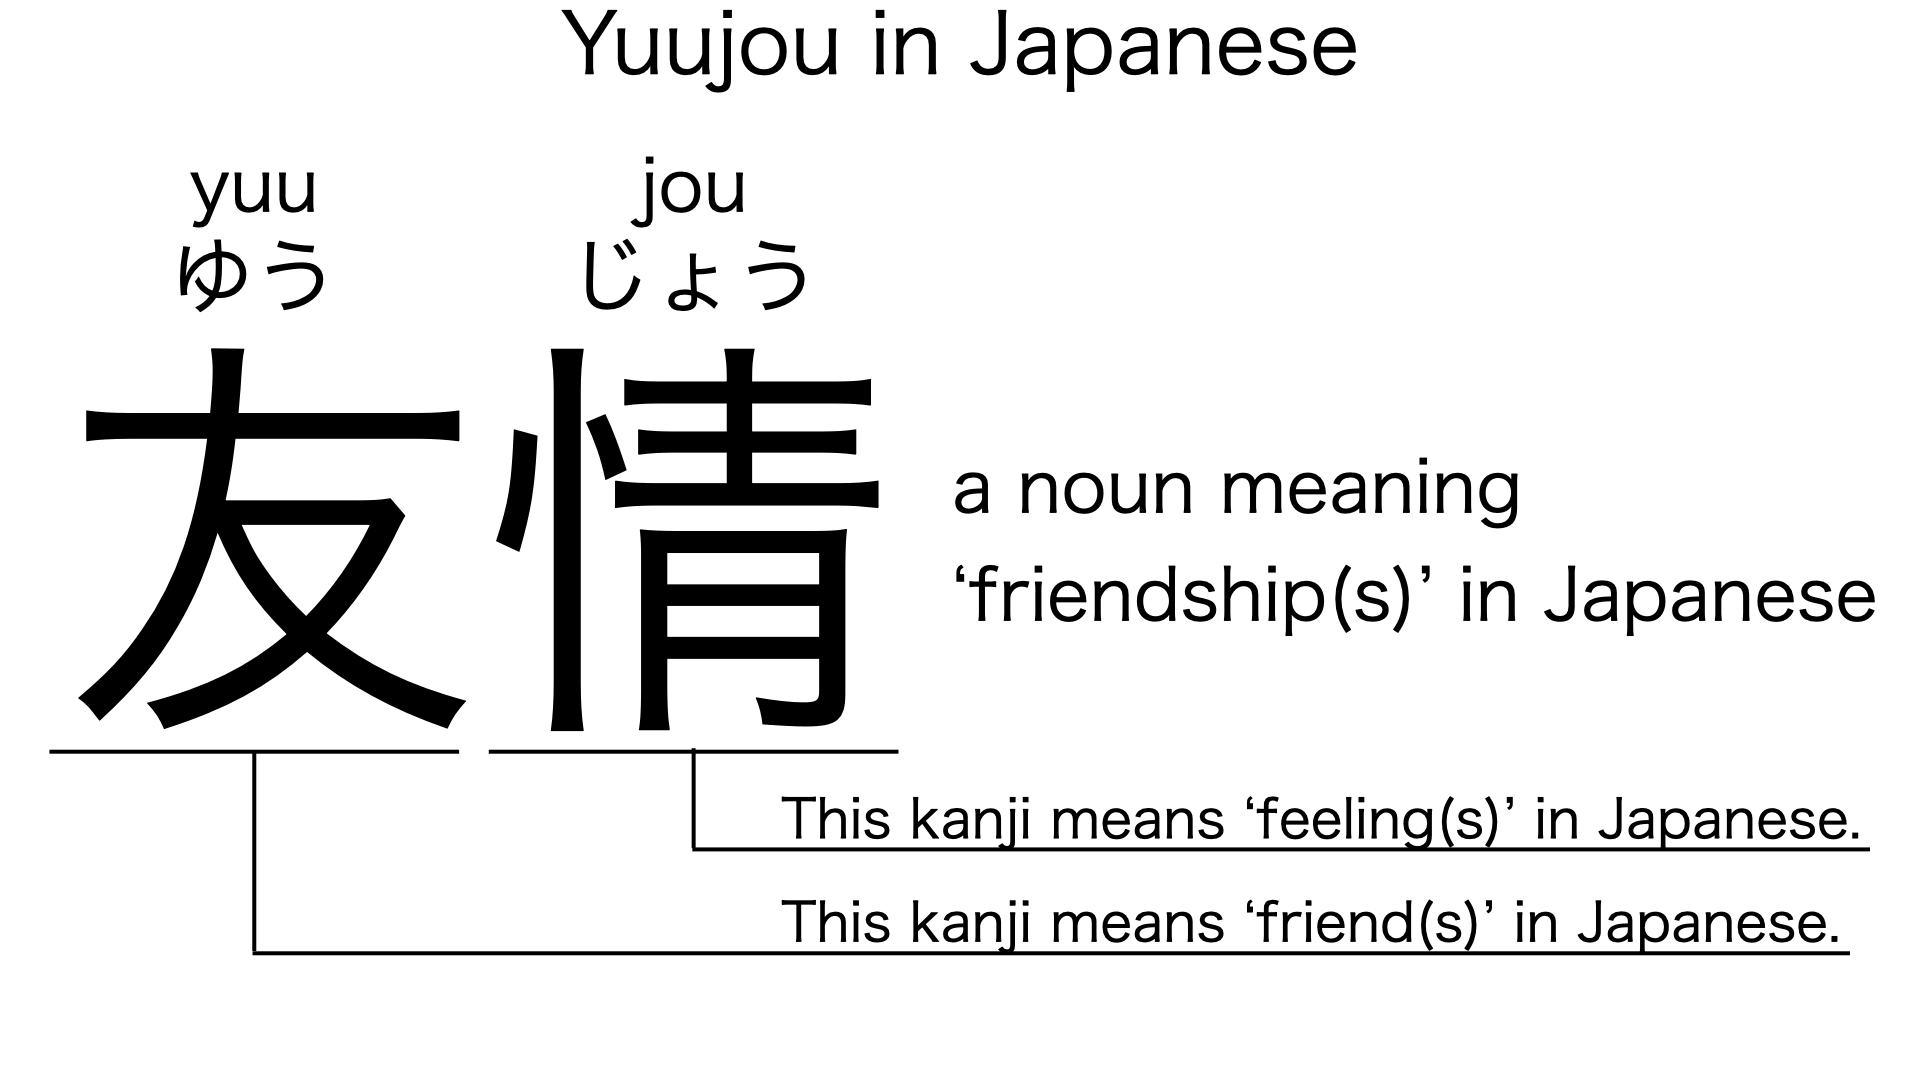 yuujou in japanese